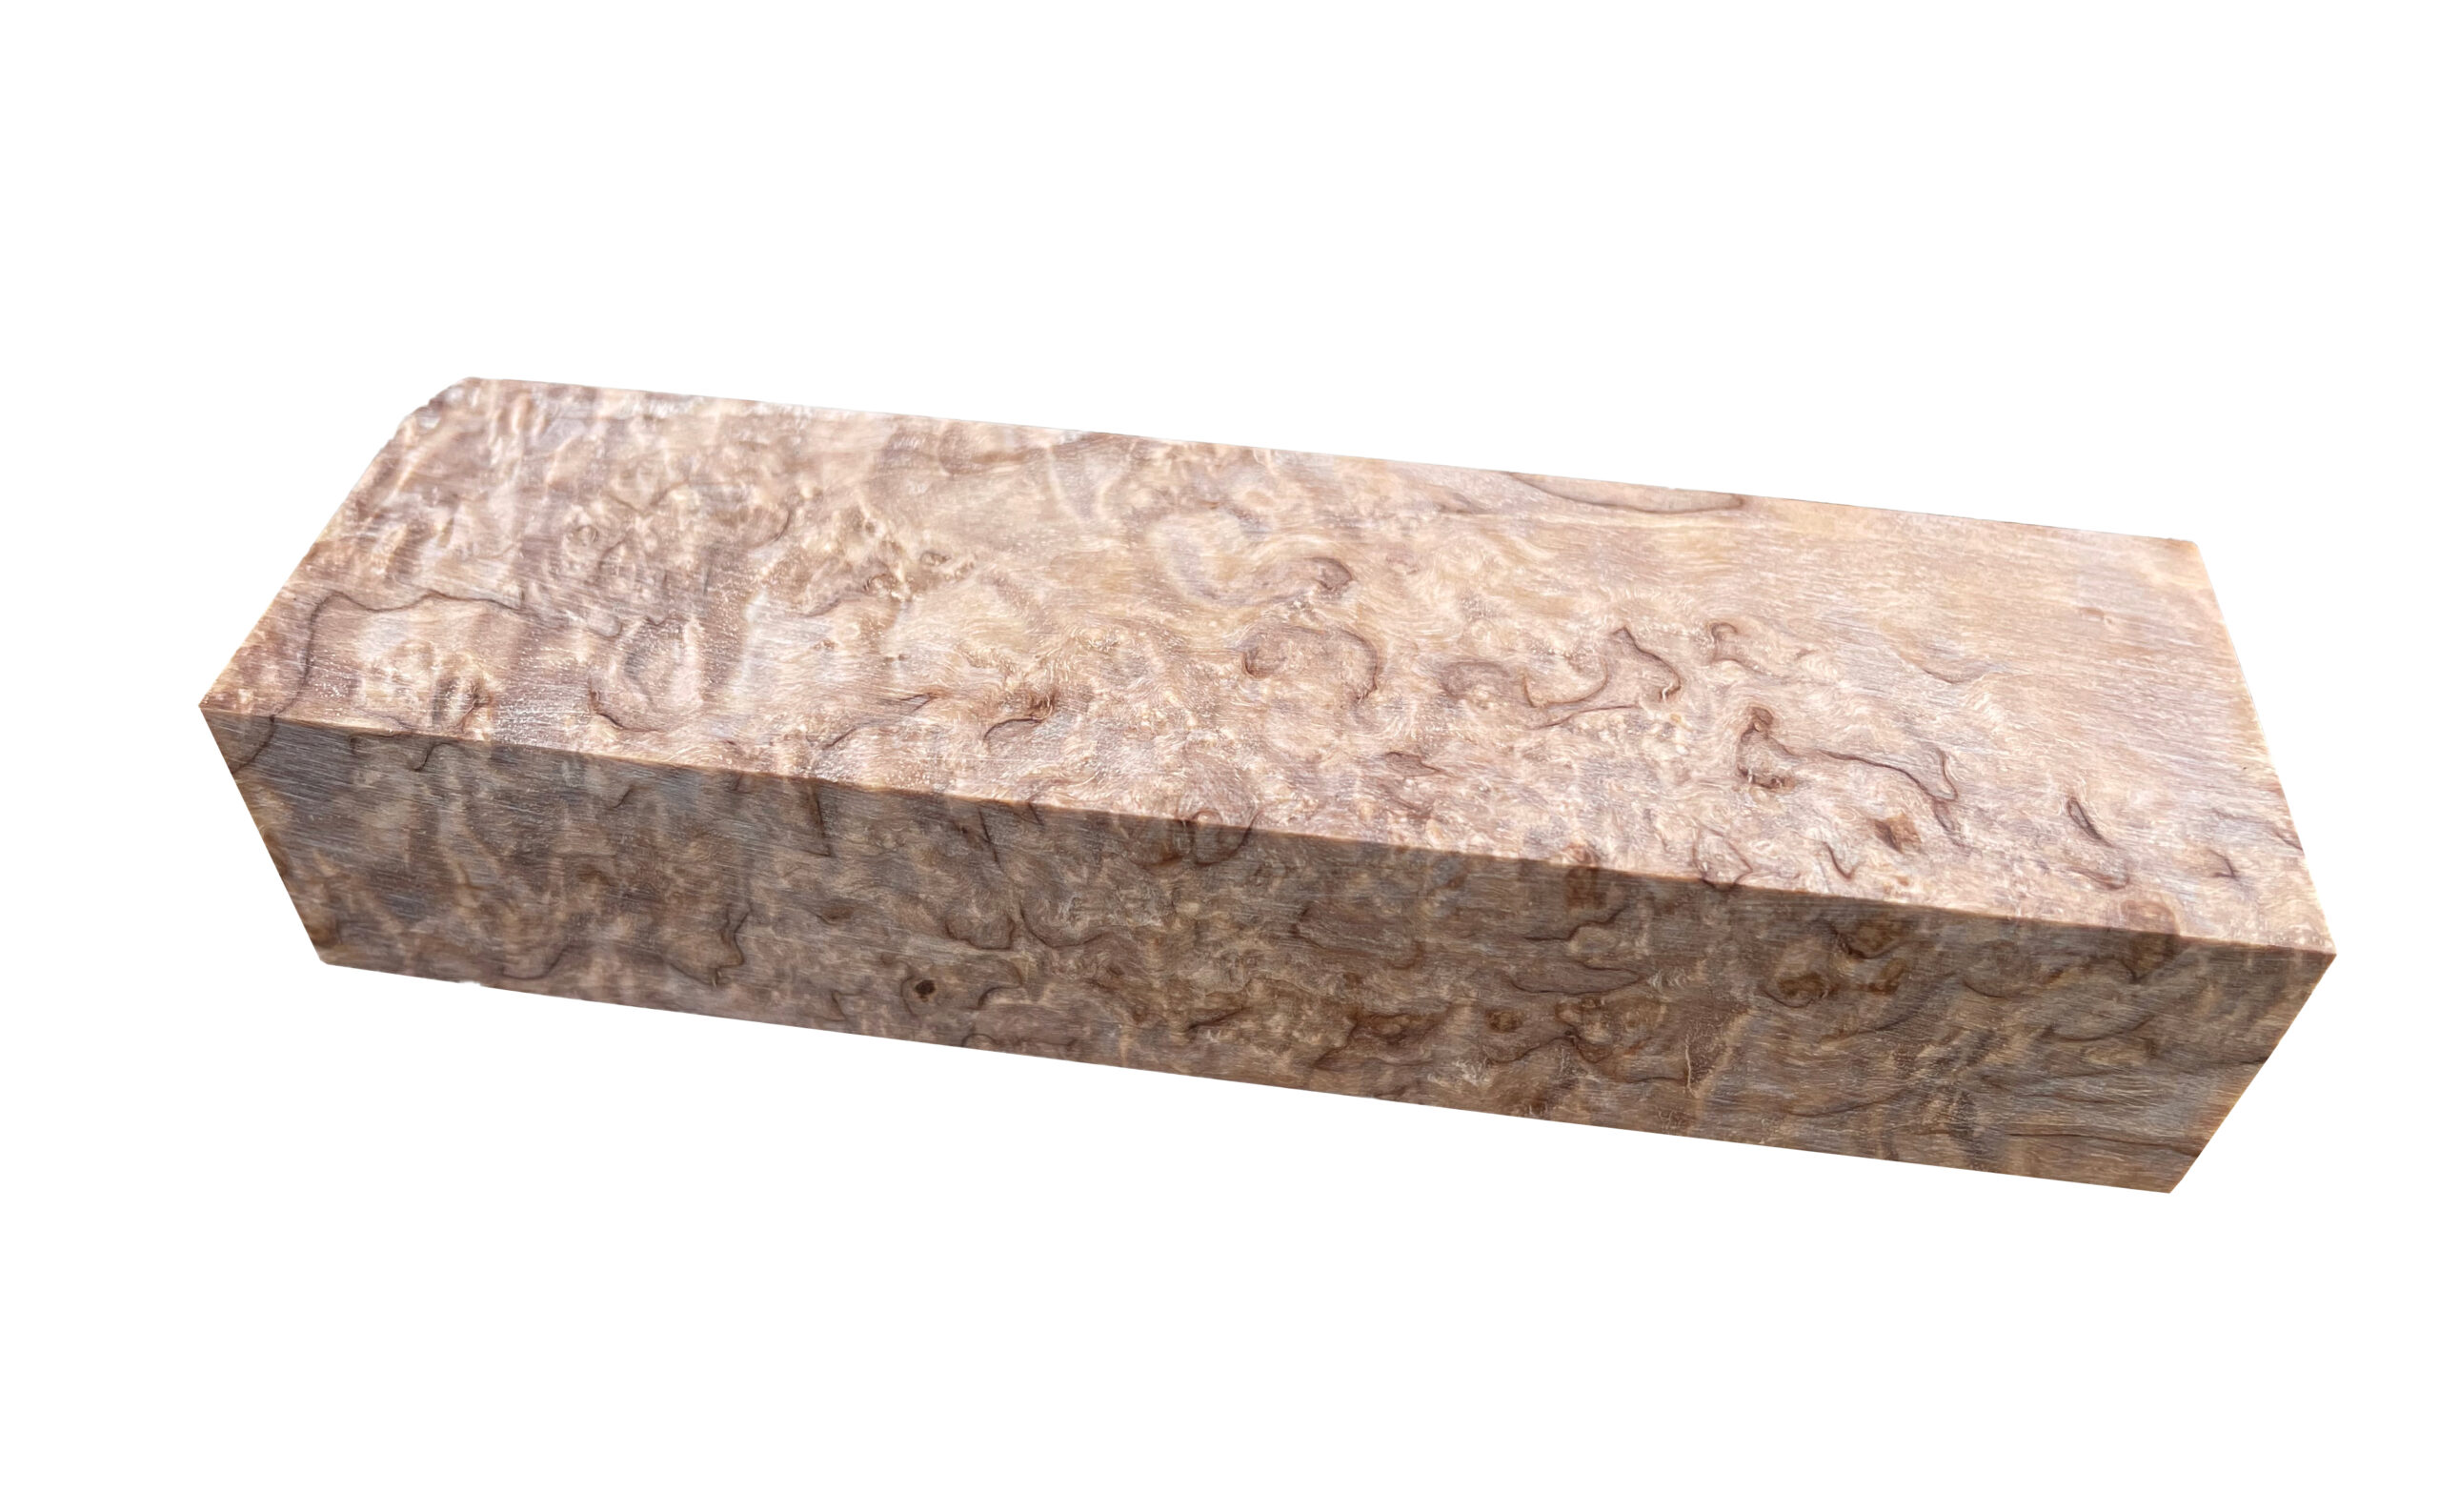 5.24-1.77-1.26inch B675 Karelian birch masur stabilized block scales blank knifemaking handle curly wood 133-45-32mm